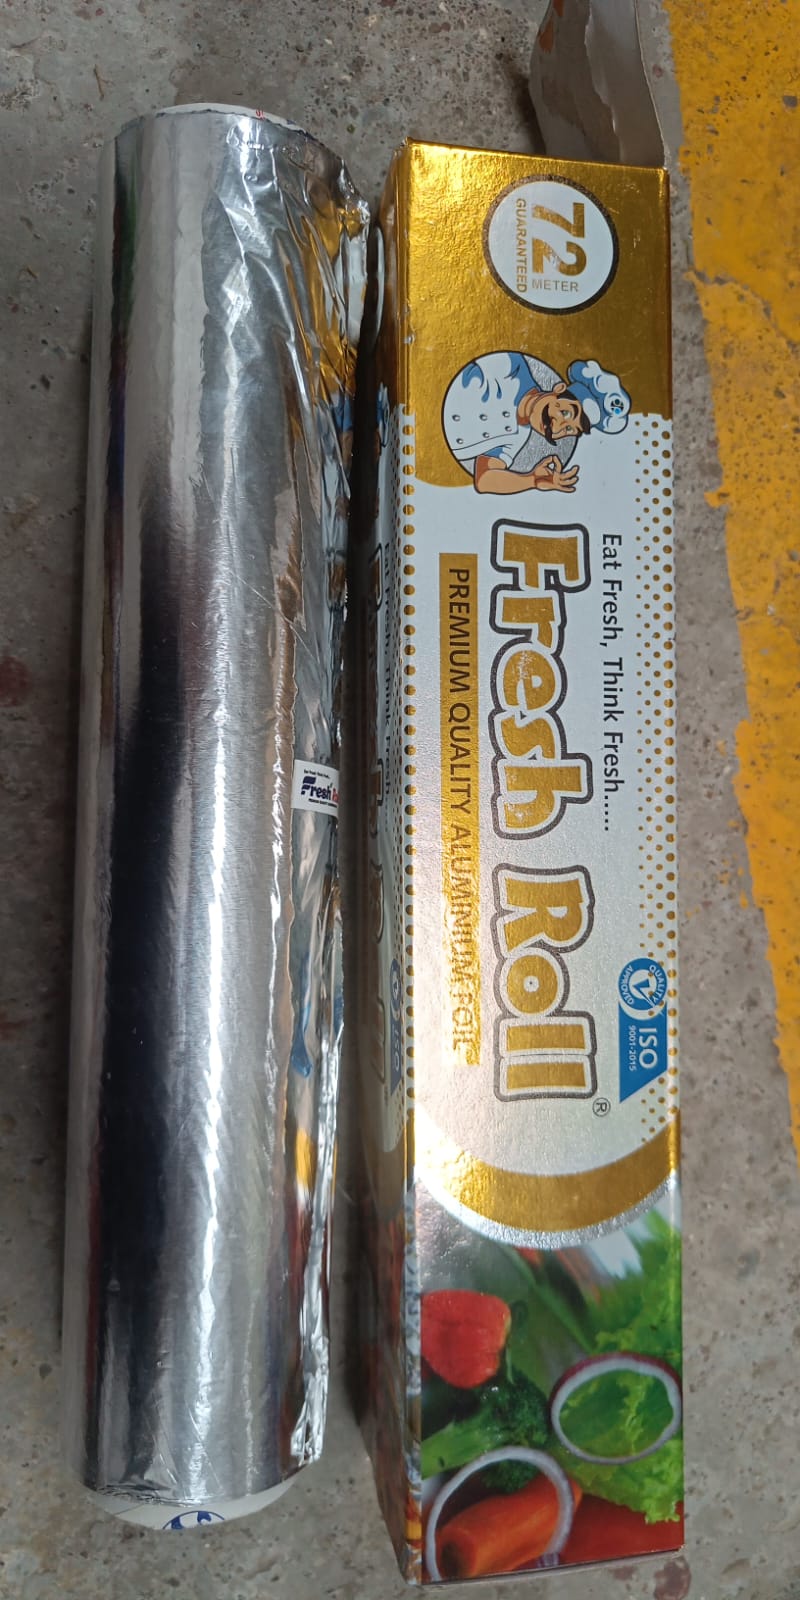 5989 Premium Quality Food Grade Aluminum Foil Roll Heavy Duty Non Stick Thick Aluminum Foil Sheet Baking Grilling Tool 72Mtr (1Pc)